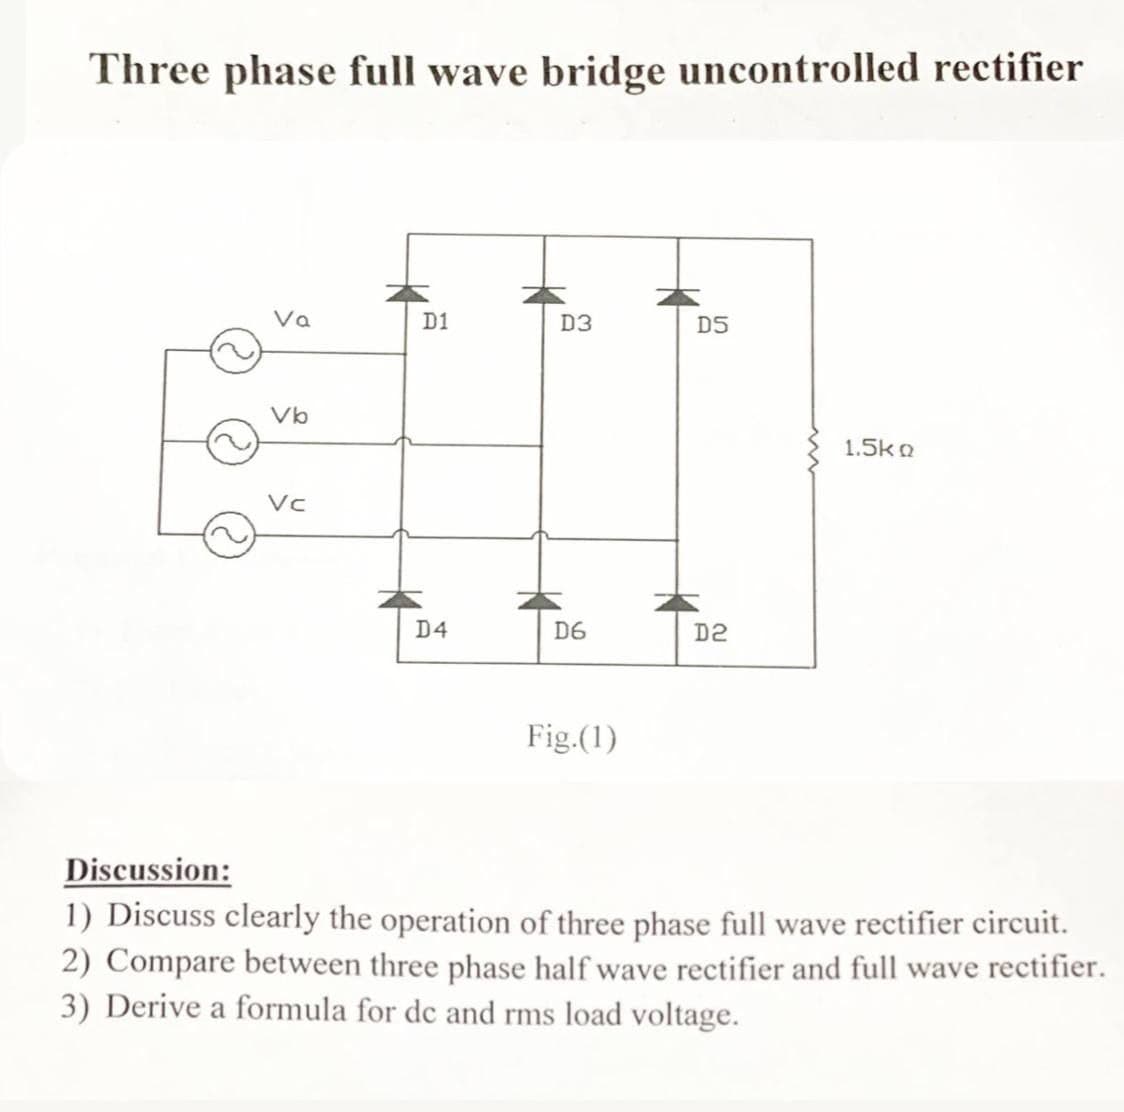 Three phase full wave bridge uncontrolled rectifier
Va
D1
D3
D5
Vb
1.5ko
Vc
D4
D6
D2
Fig.(1)
Discussion:
1) Discuss clearly the operation of three phase full wave rectifier circuit.
2) Compare between three phase half wave rectifier and full wave rectifier.
3) Derive a formula for de and rms load voltage.
